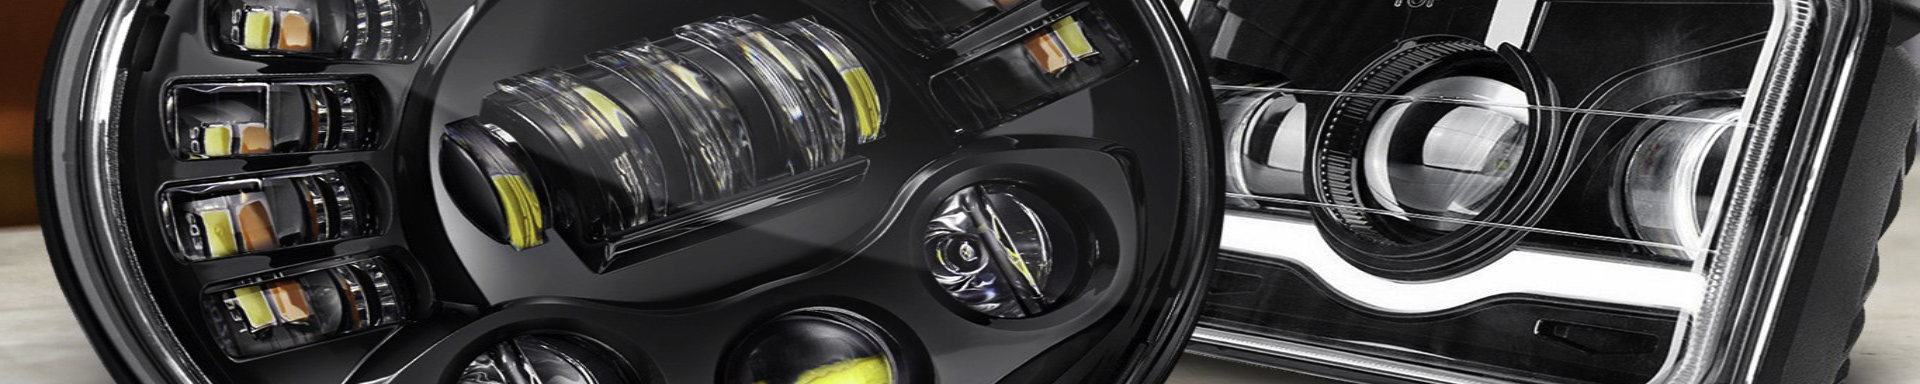 Universal Sealed Beam Headlights | GarageAndFab.com | Munro Industries gf-100103041108